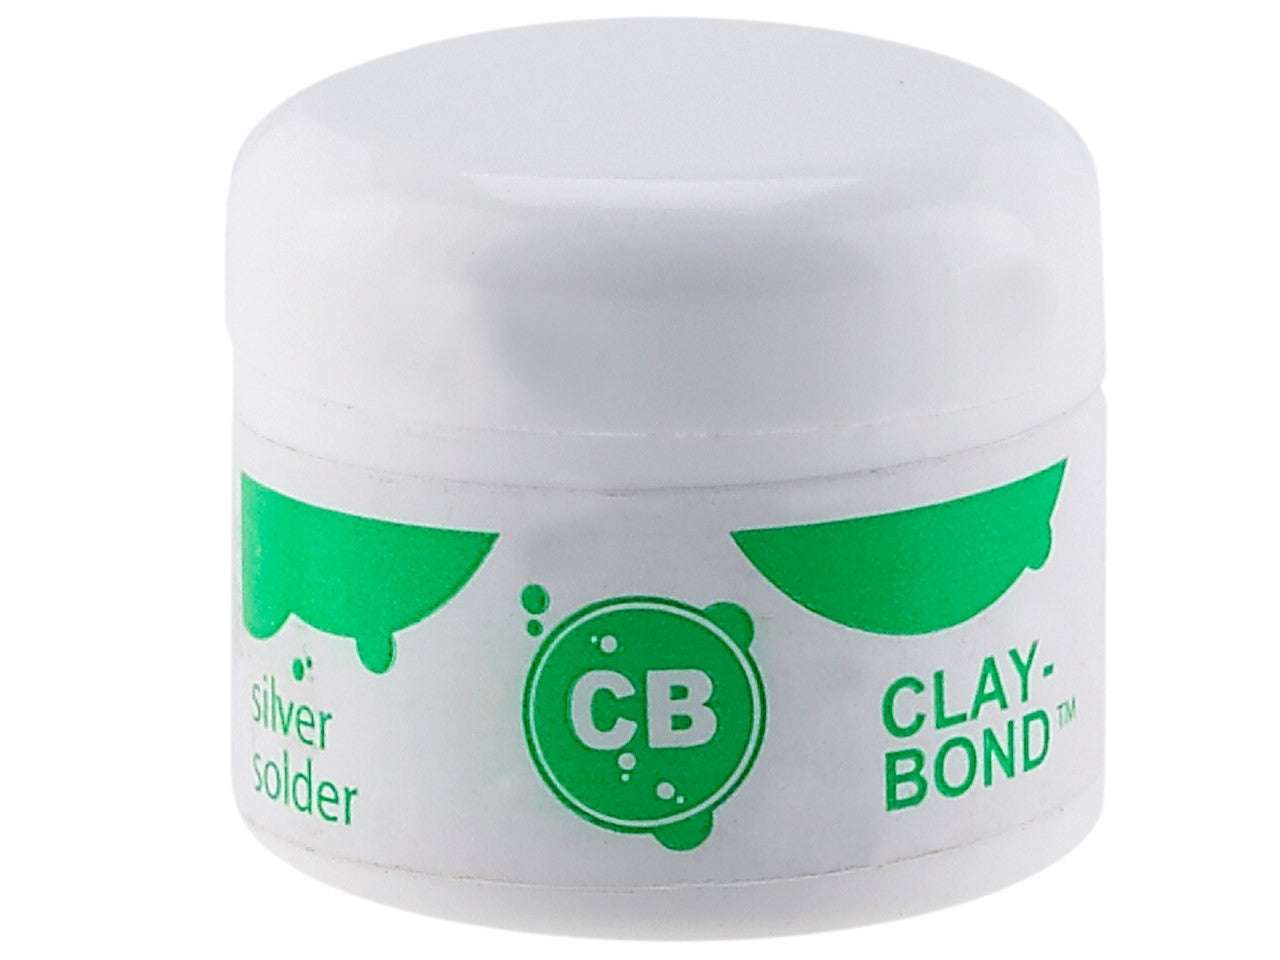 Clay Bond 10gr